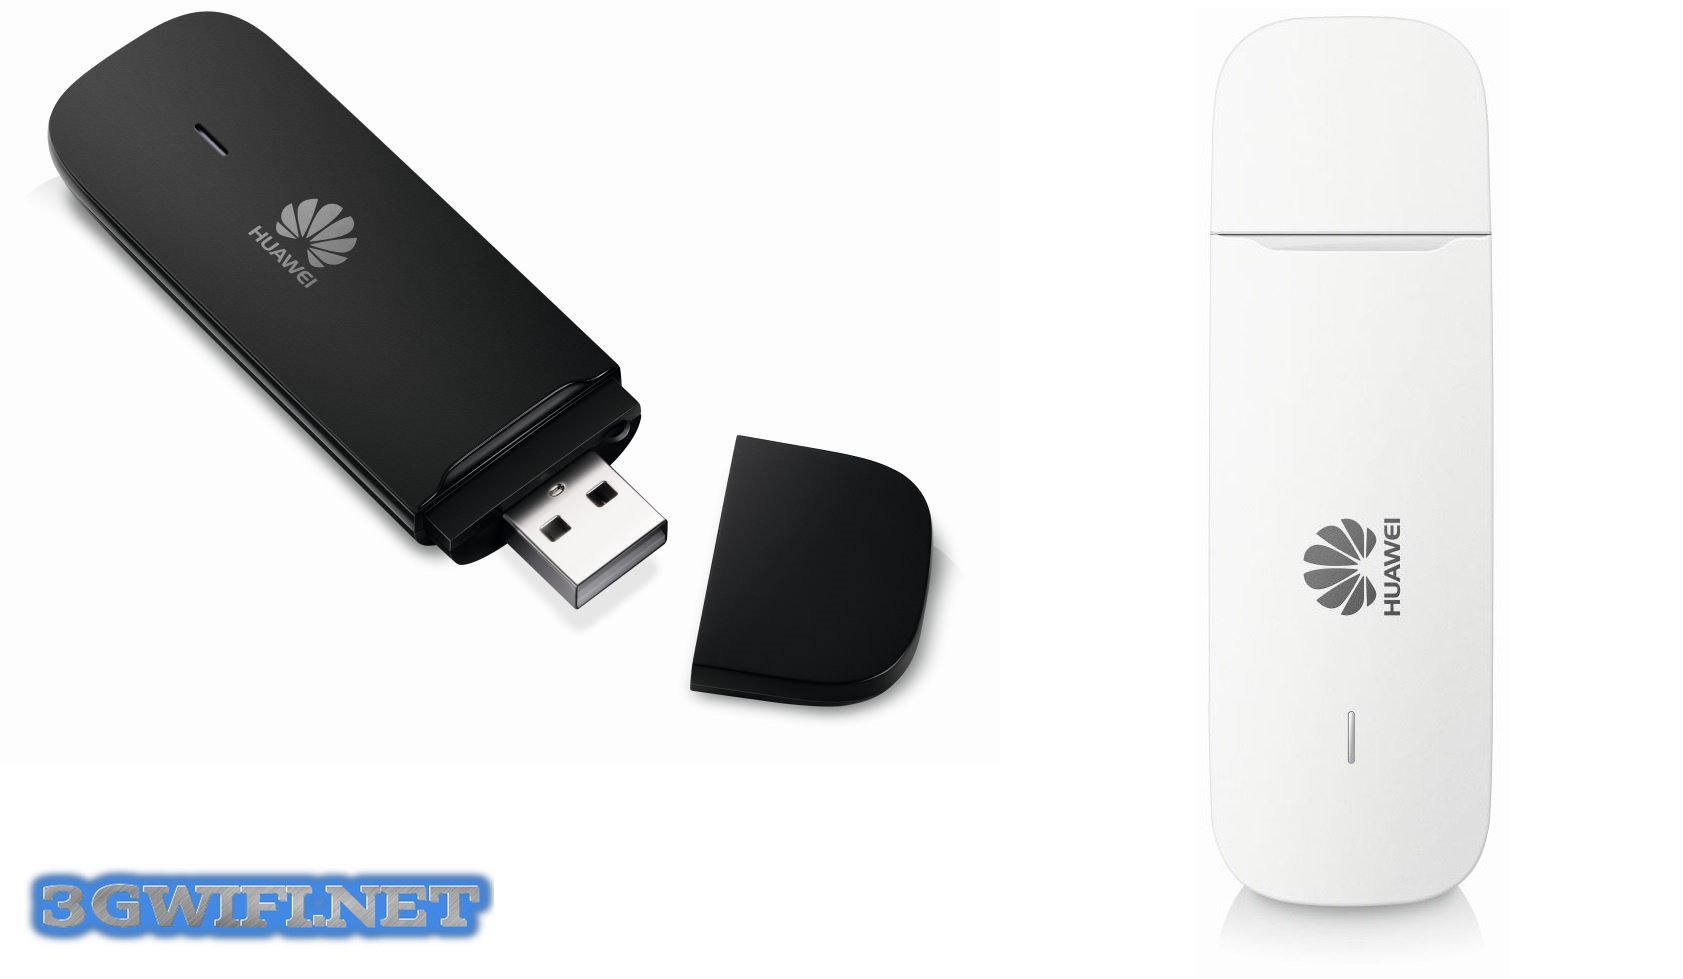 USB 3G Huawei E3531 tốc độ cao